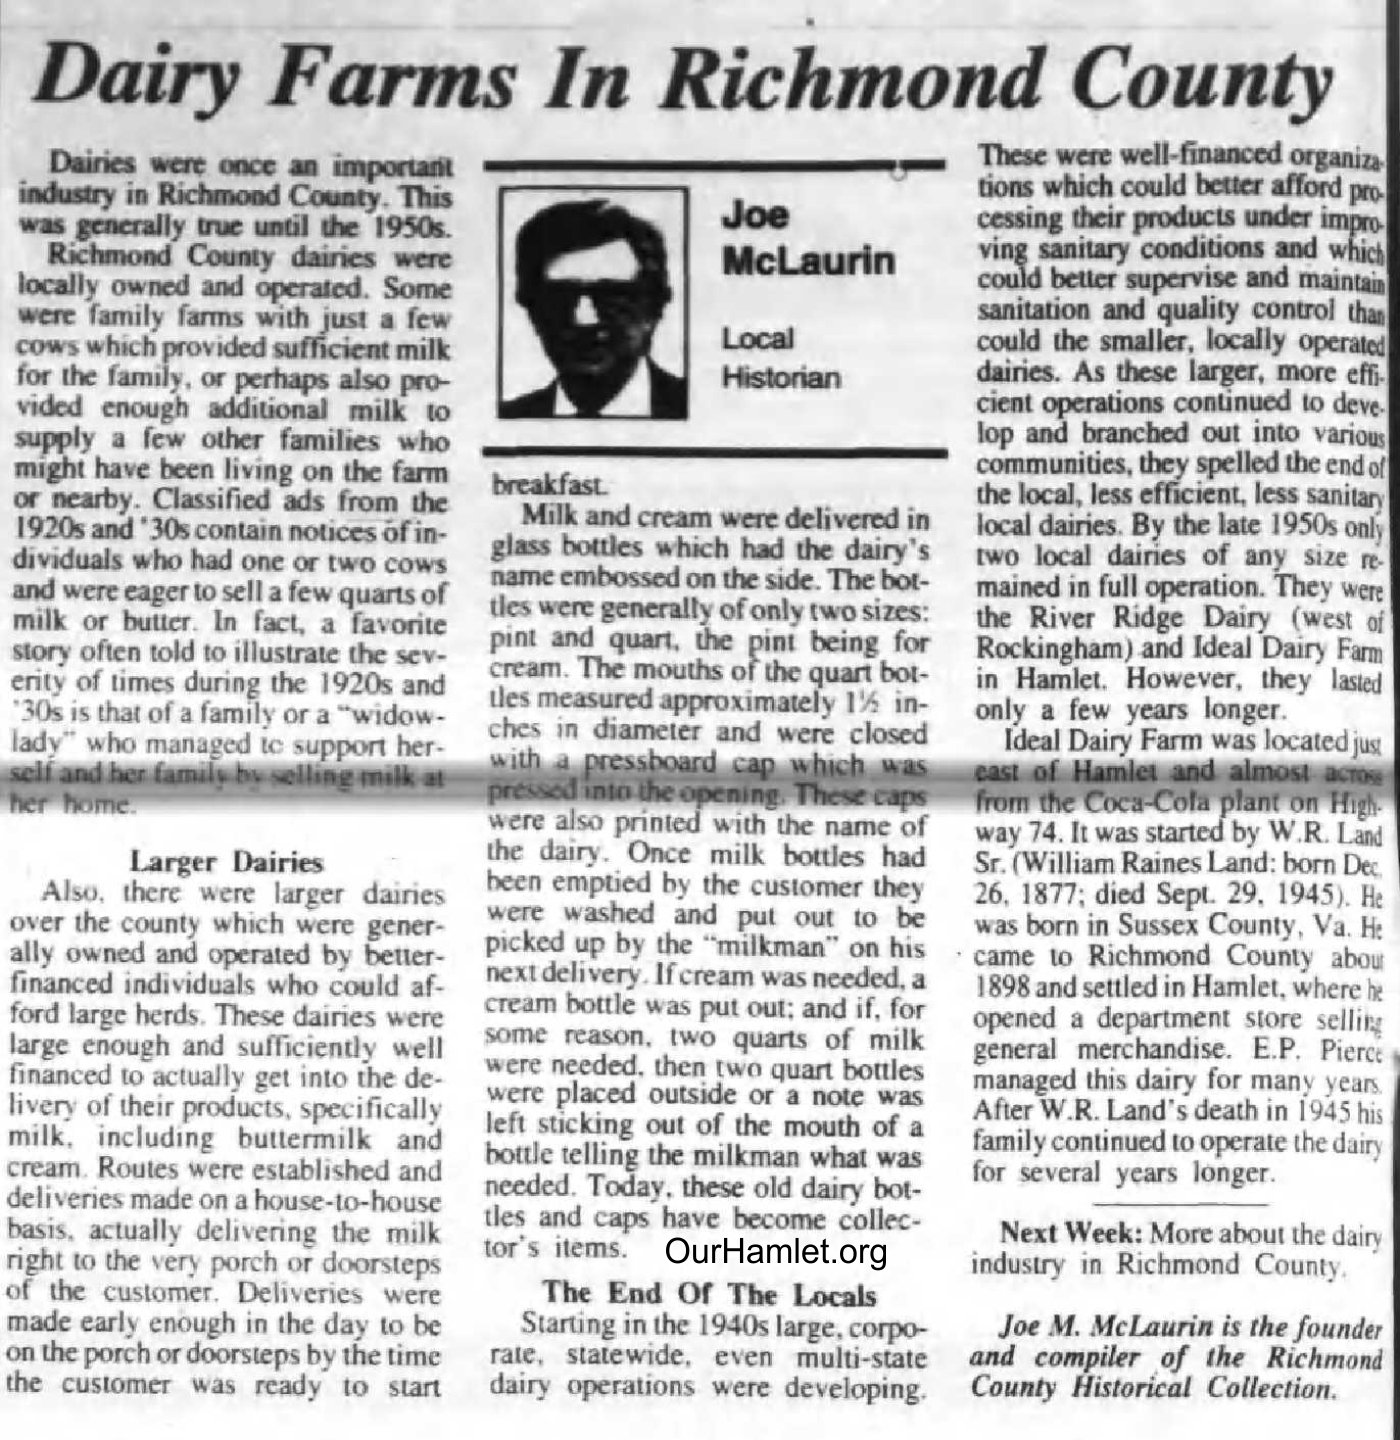 Joe McLaurin Dairy Farms in Richmond County OH.jpg